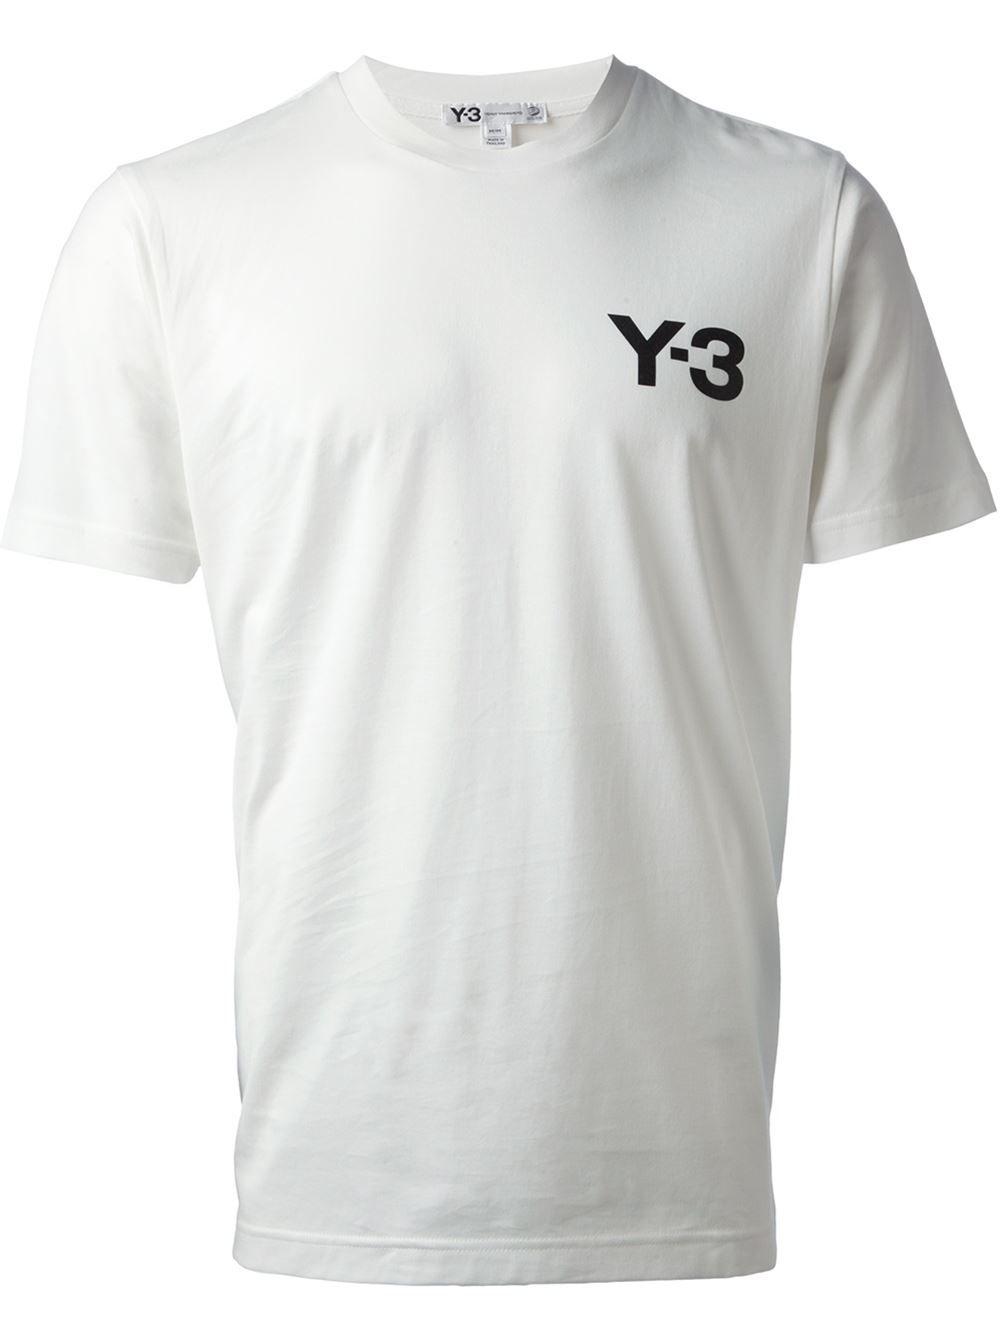 Black and White Y Logo - Y-3 Logo Tshirt in White for Men - Lyst